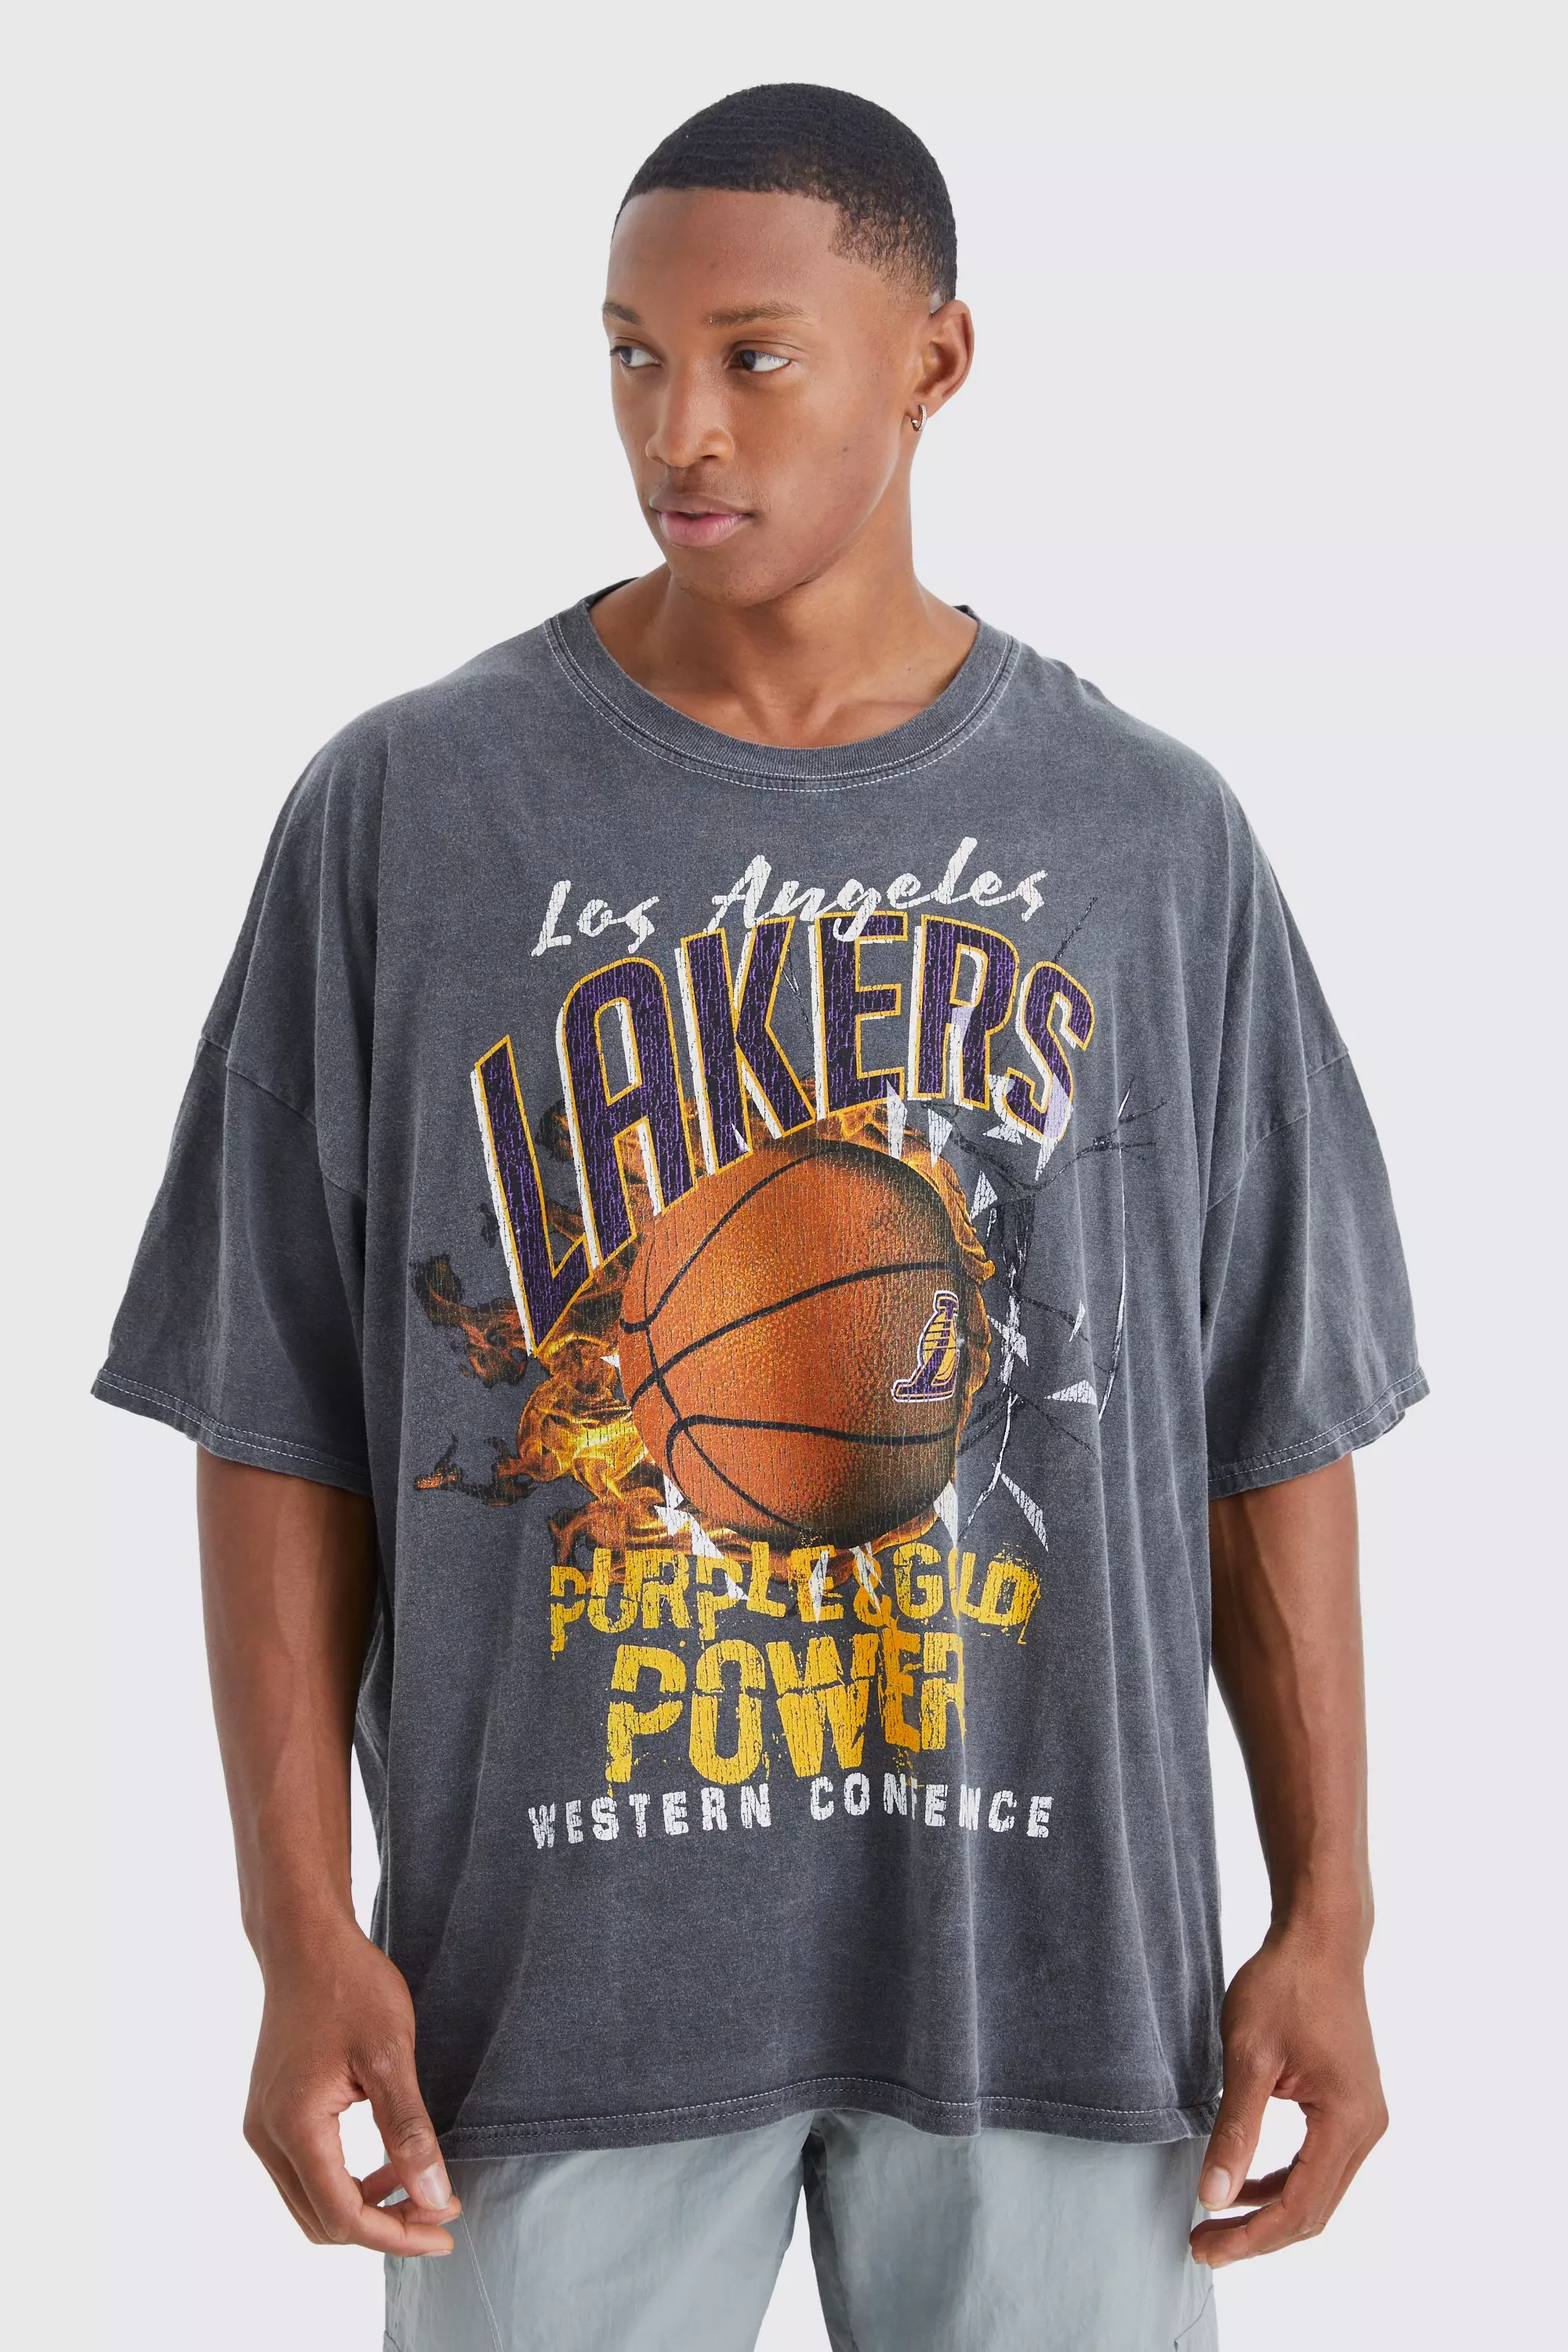 Los Angeles Lakers NBA Trikot, Basketball Trikot NBA Los Angeles Lakers